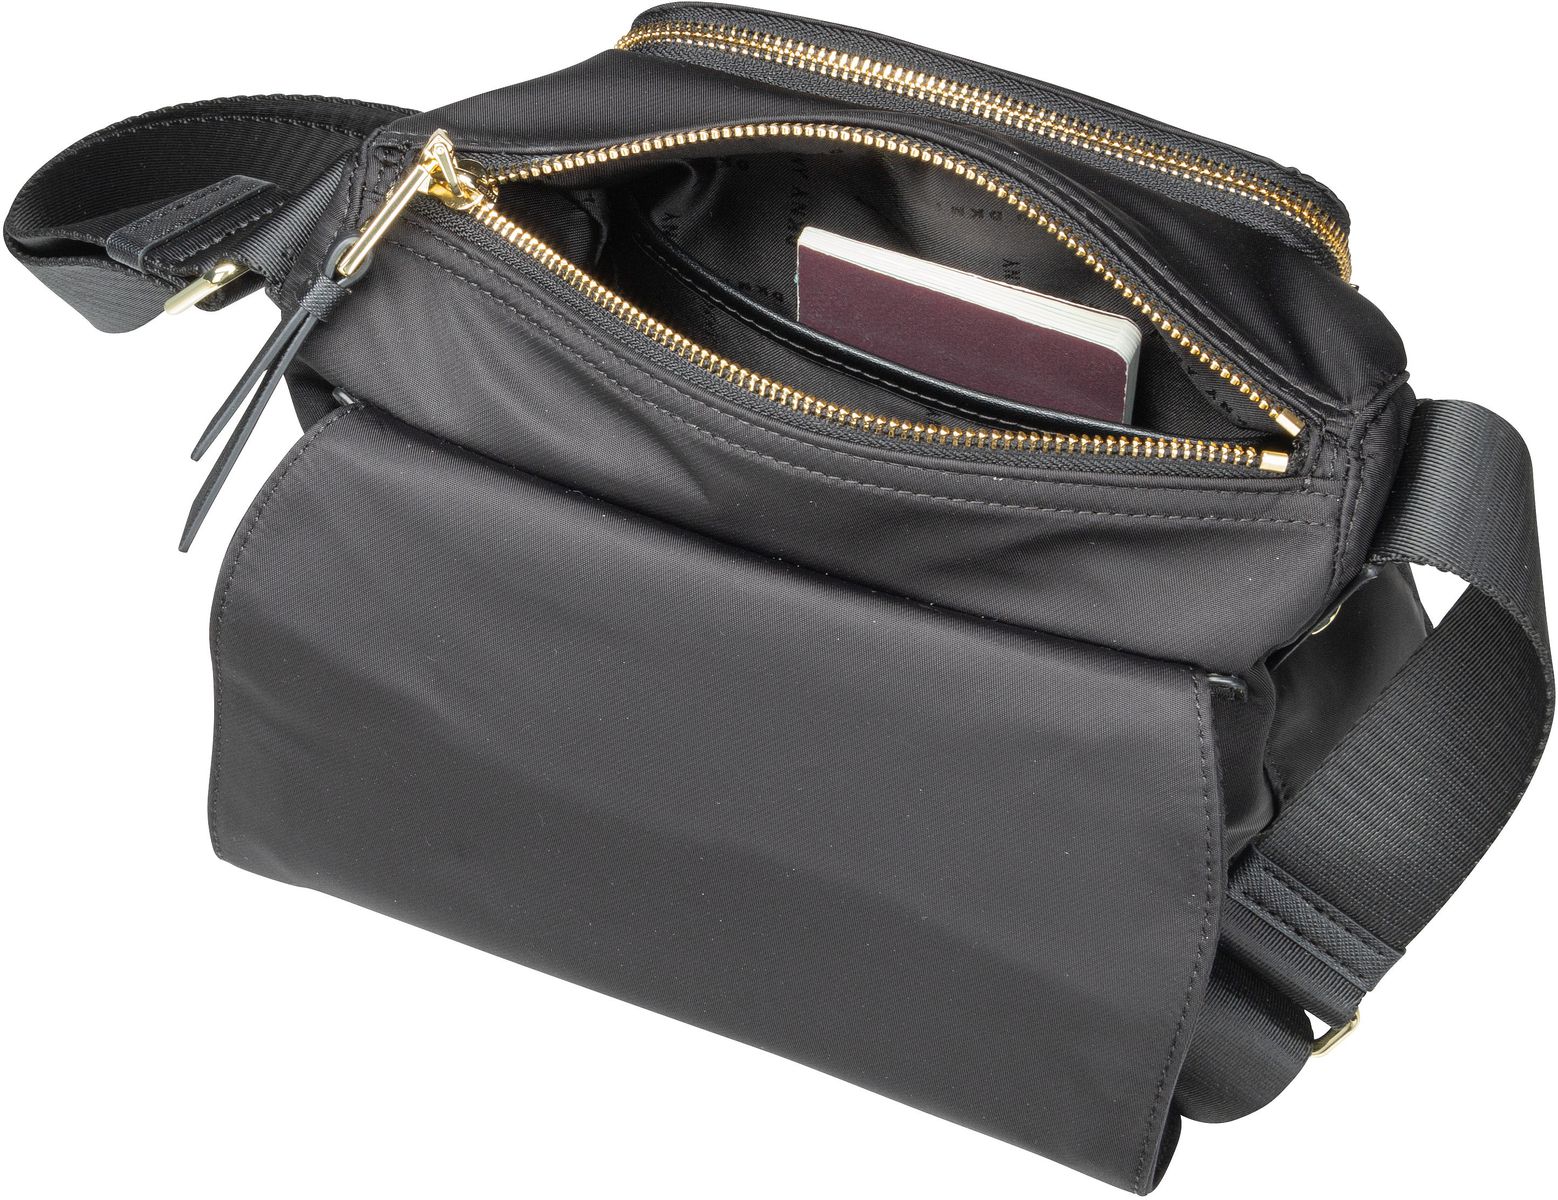 DKNY Cora Messenger Bag - Black/Gold